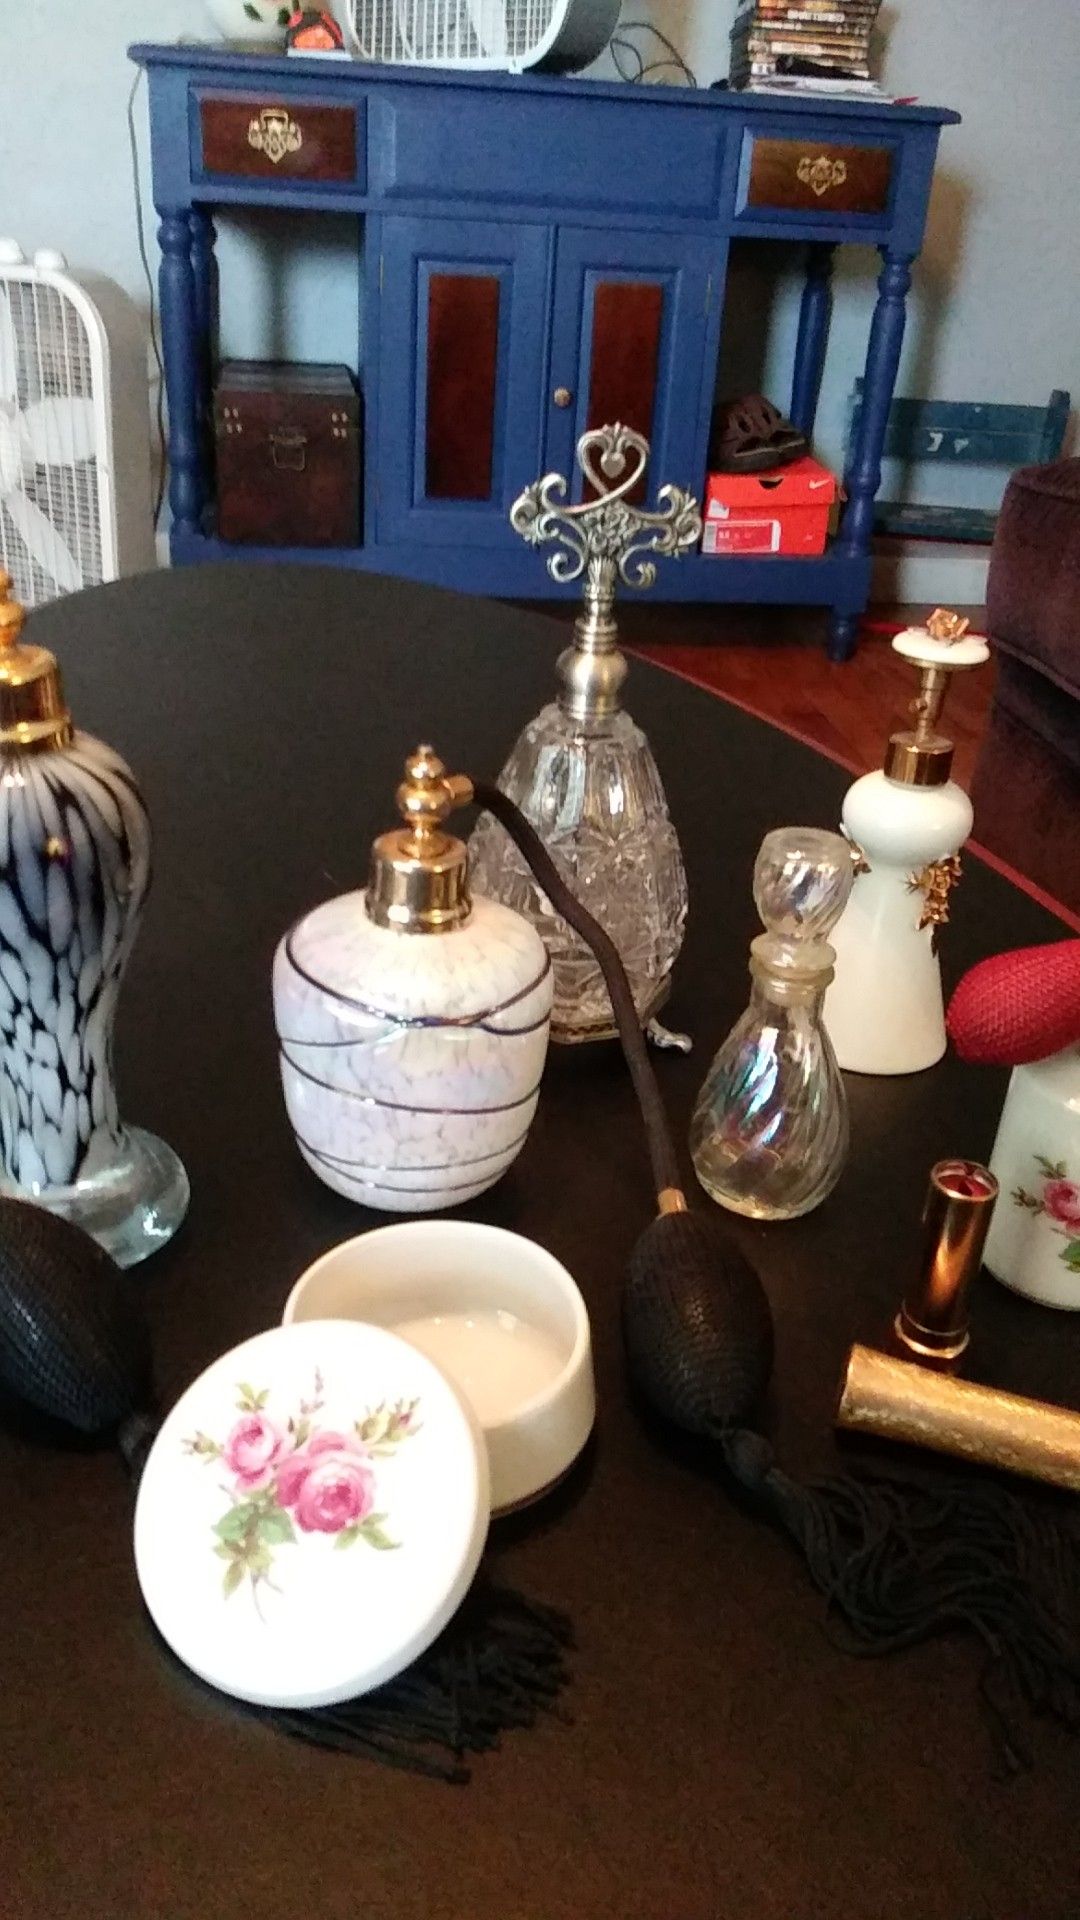 Decorative/working vintage perfume bottles.